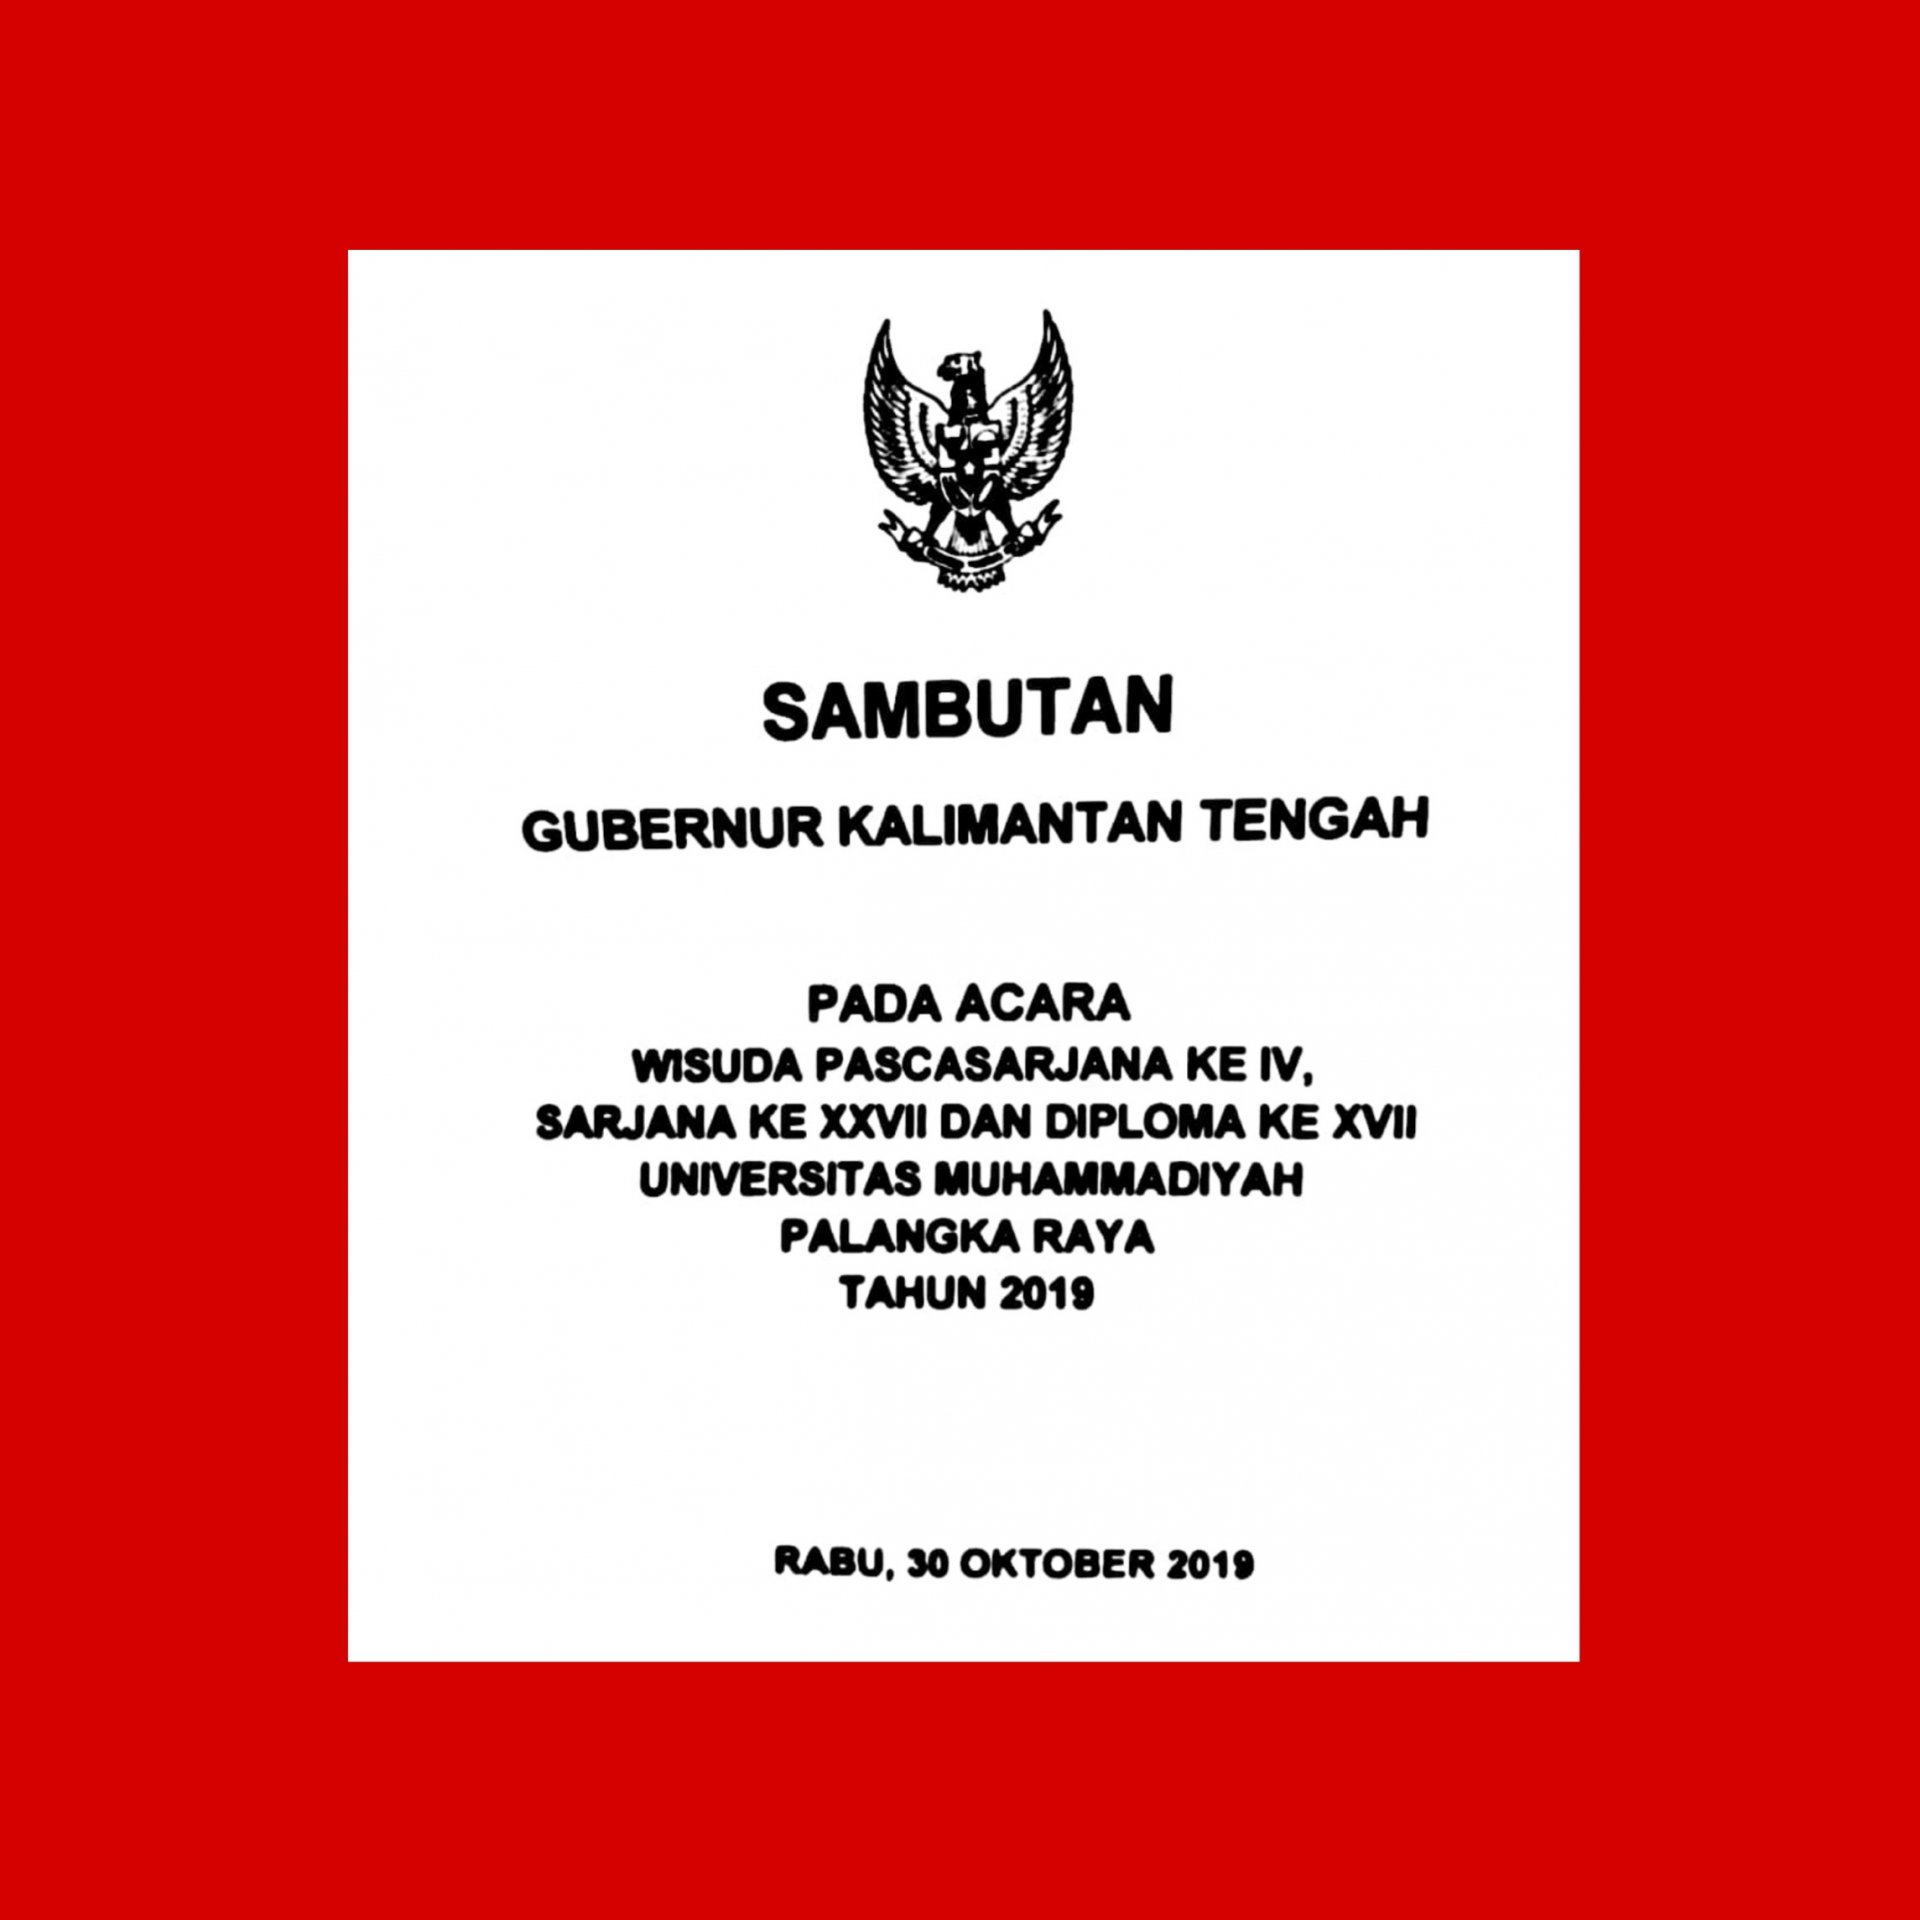 Sambutan Gubernur Kalimantan Tengah pada Acara Wisuda Pascasarjana, Sarjana, dan Diploma Universitas Muhammadiyah Palangka Raya